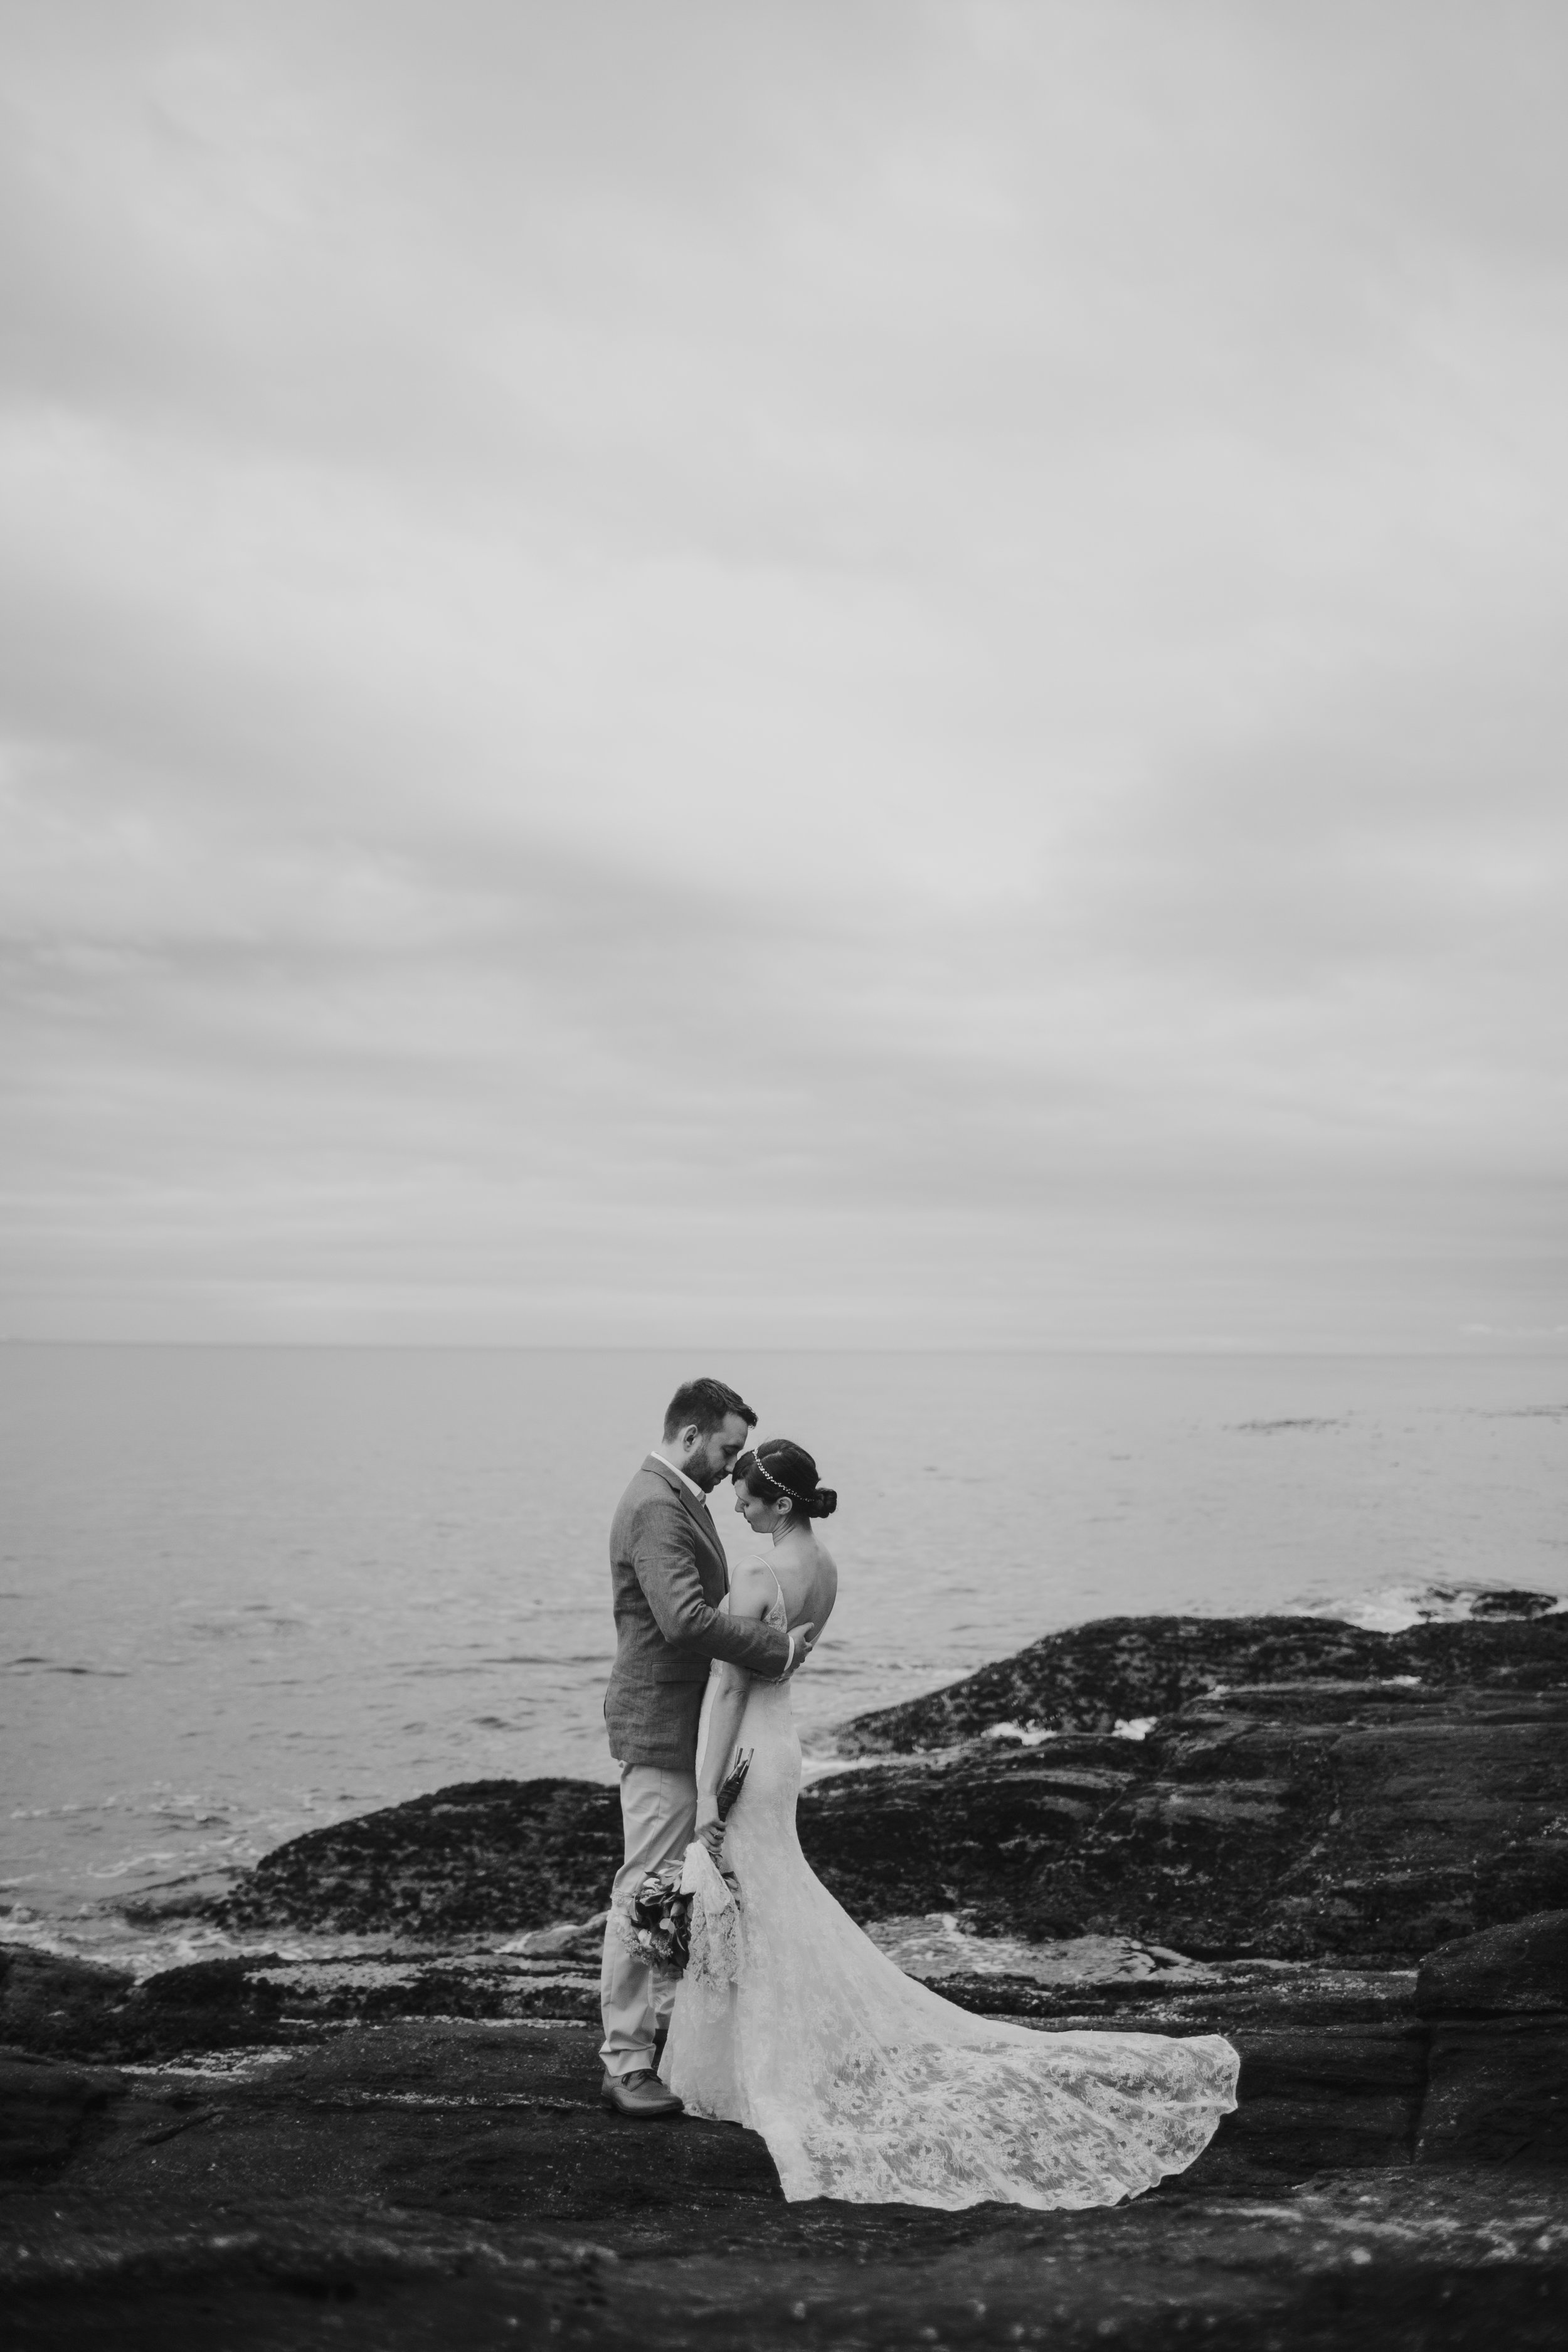 PNW-elopement-wedding-engagement-olympic national park-port angeles-hurricane ridge-lake crescent-kayla dawn photography- photographer-photography-kayladawnphoto-311.jpg